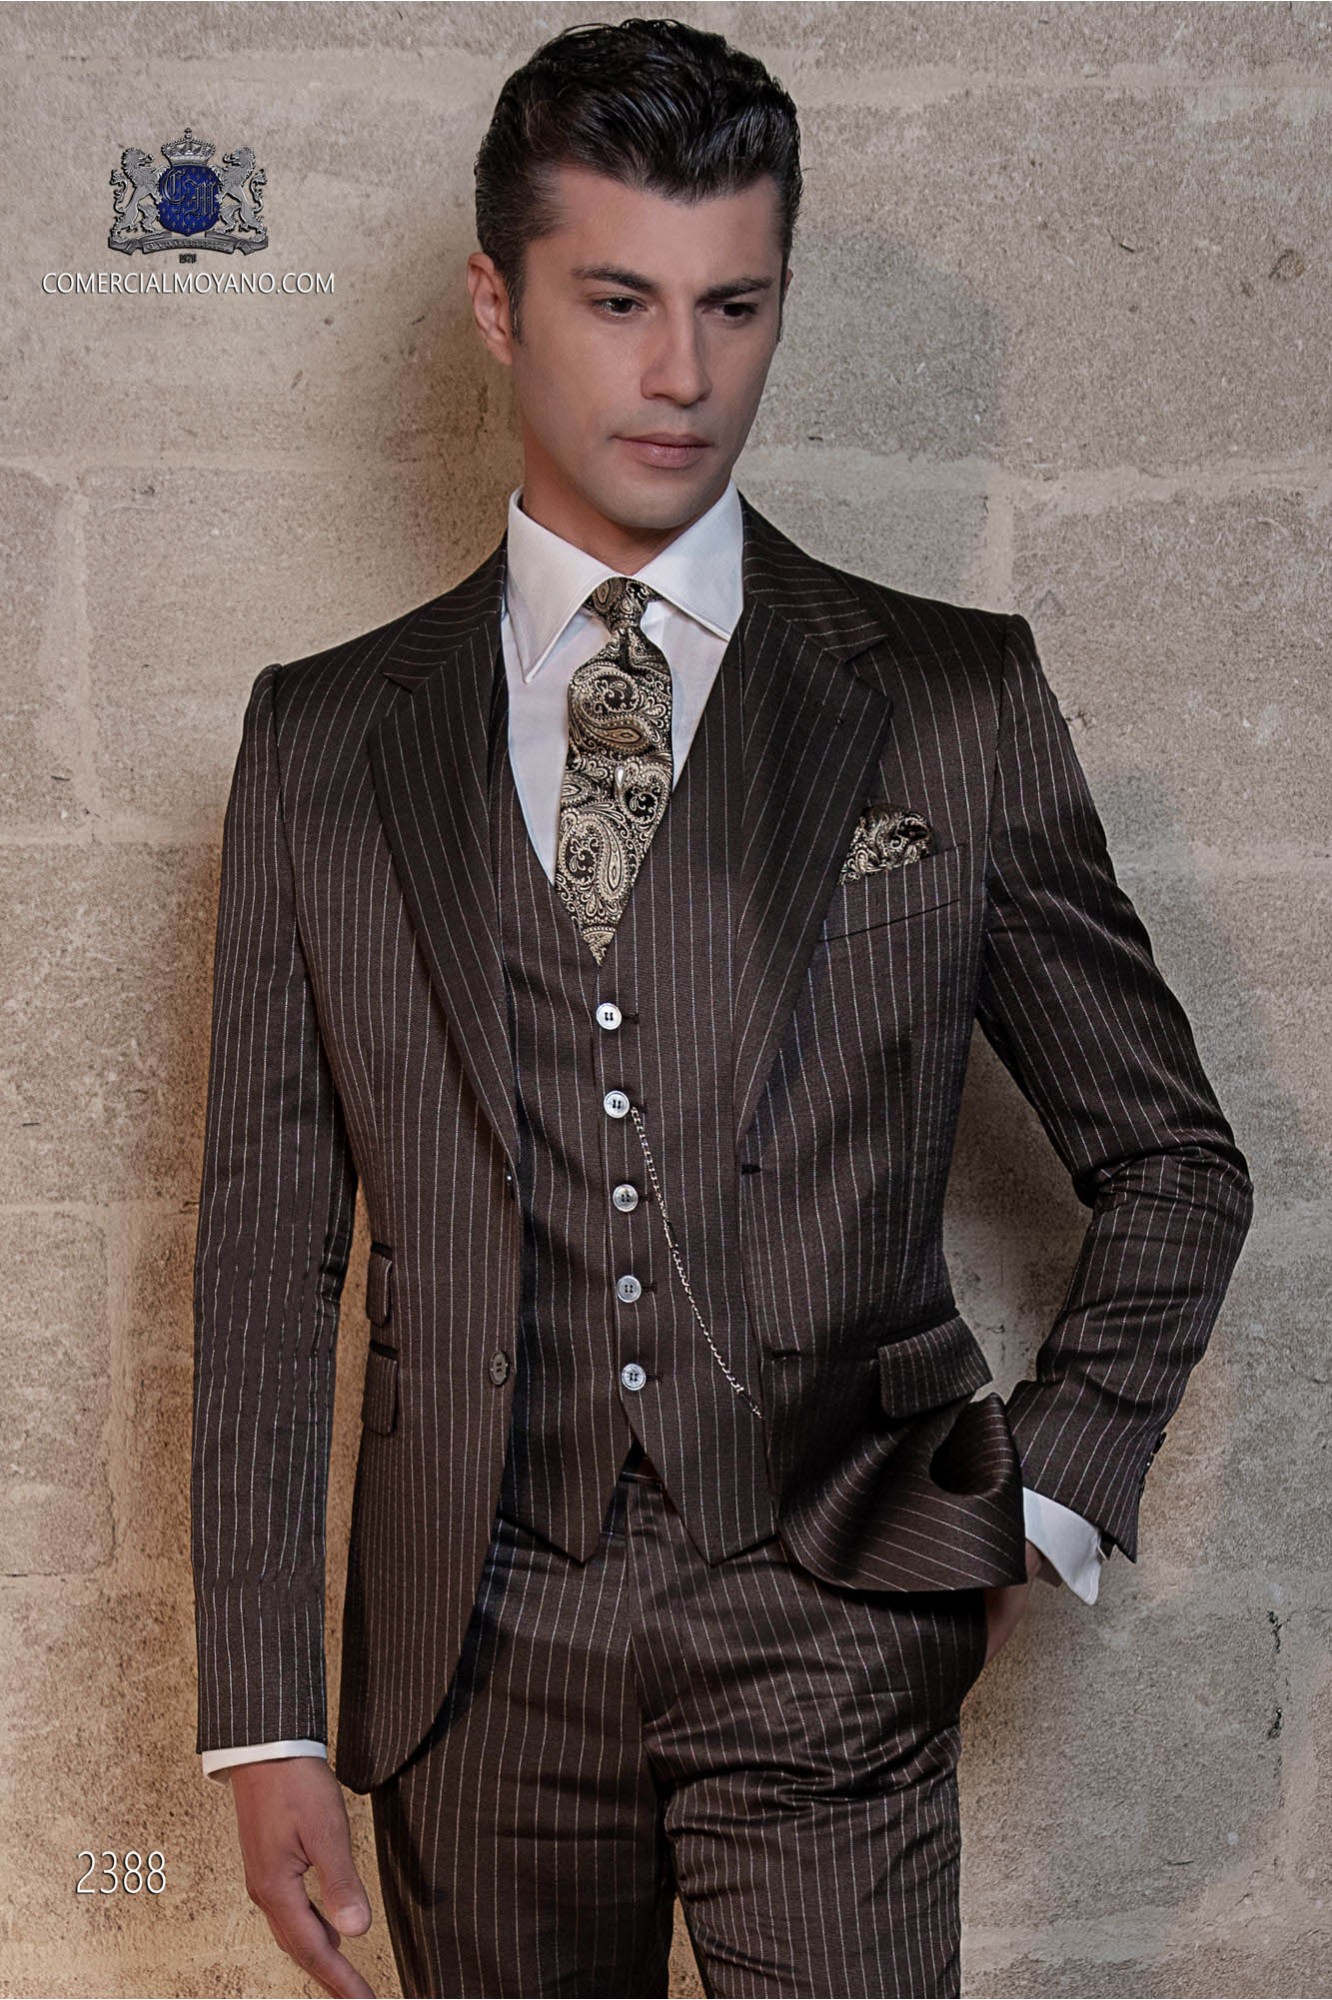 Traje raya diplomática marrón modelo: 2388 Mario Moyano colección Gentleman